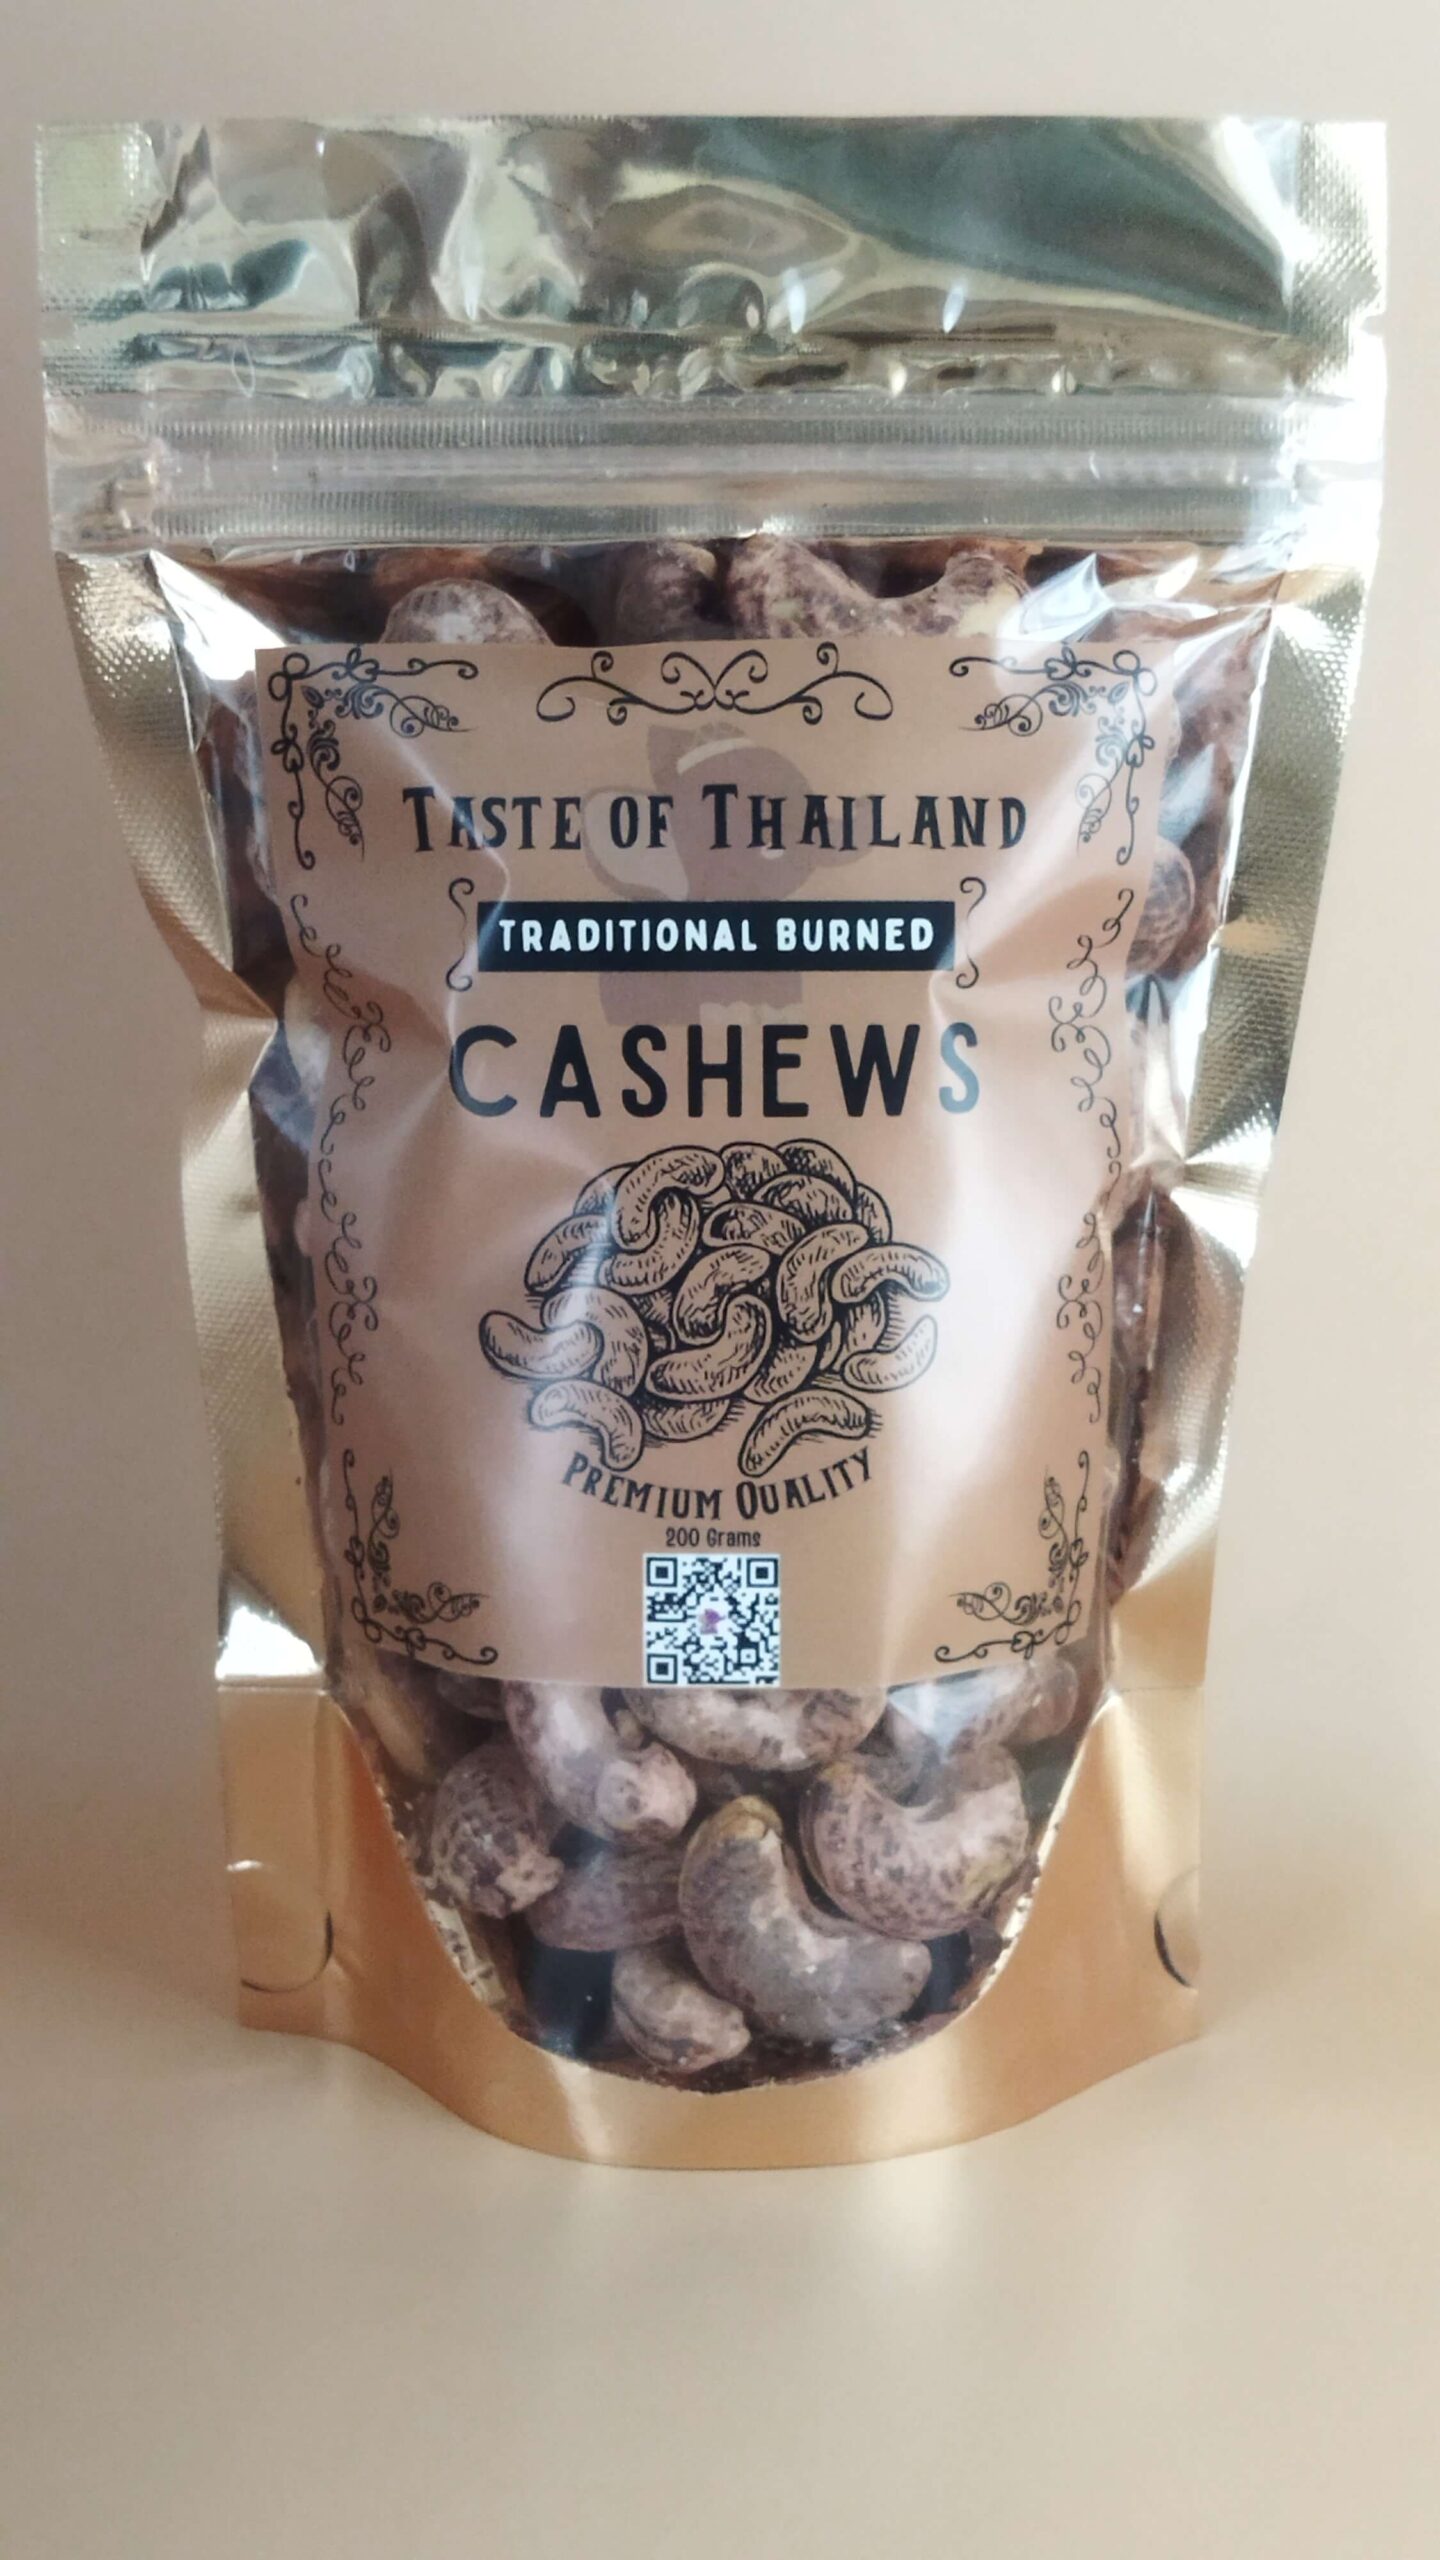 Taste of Thailand Traditional Burned Cashews